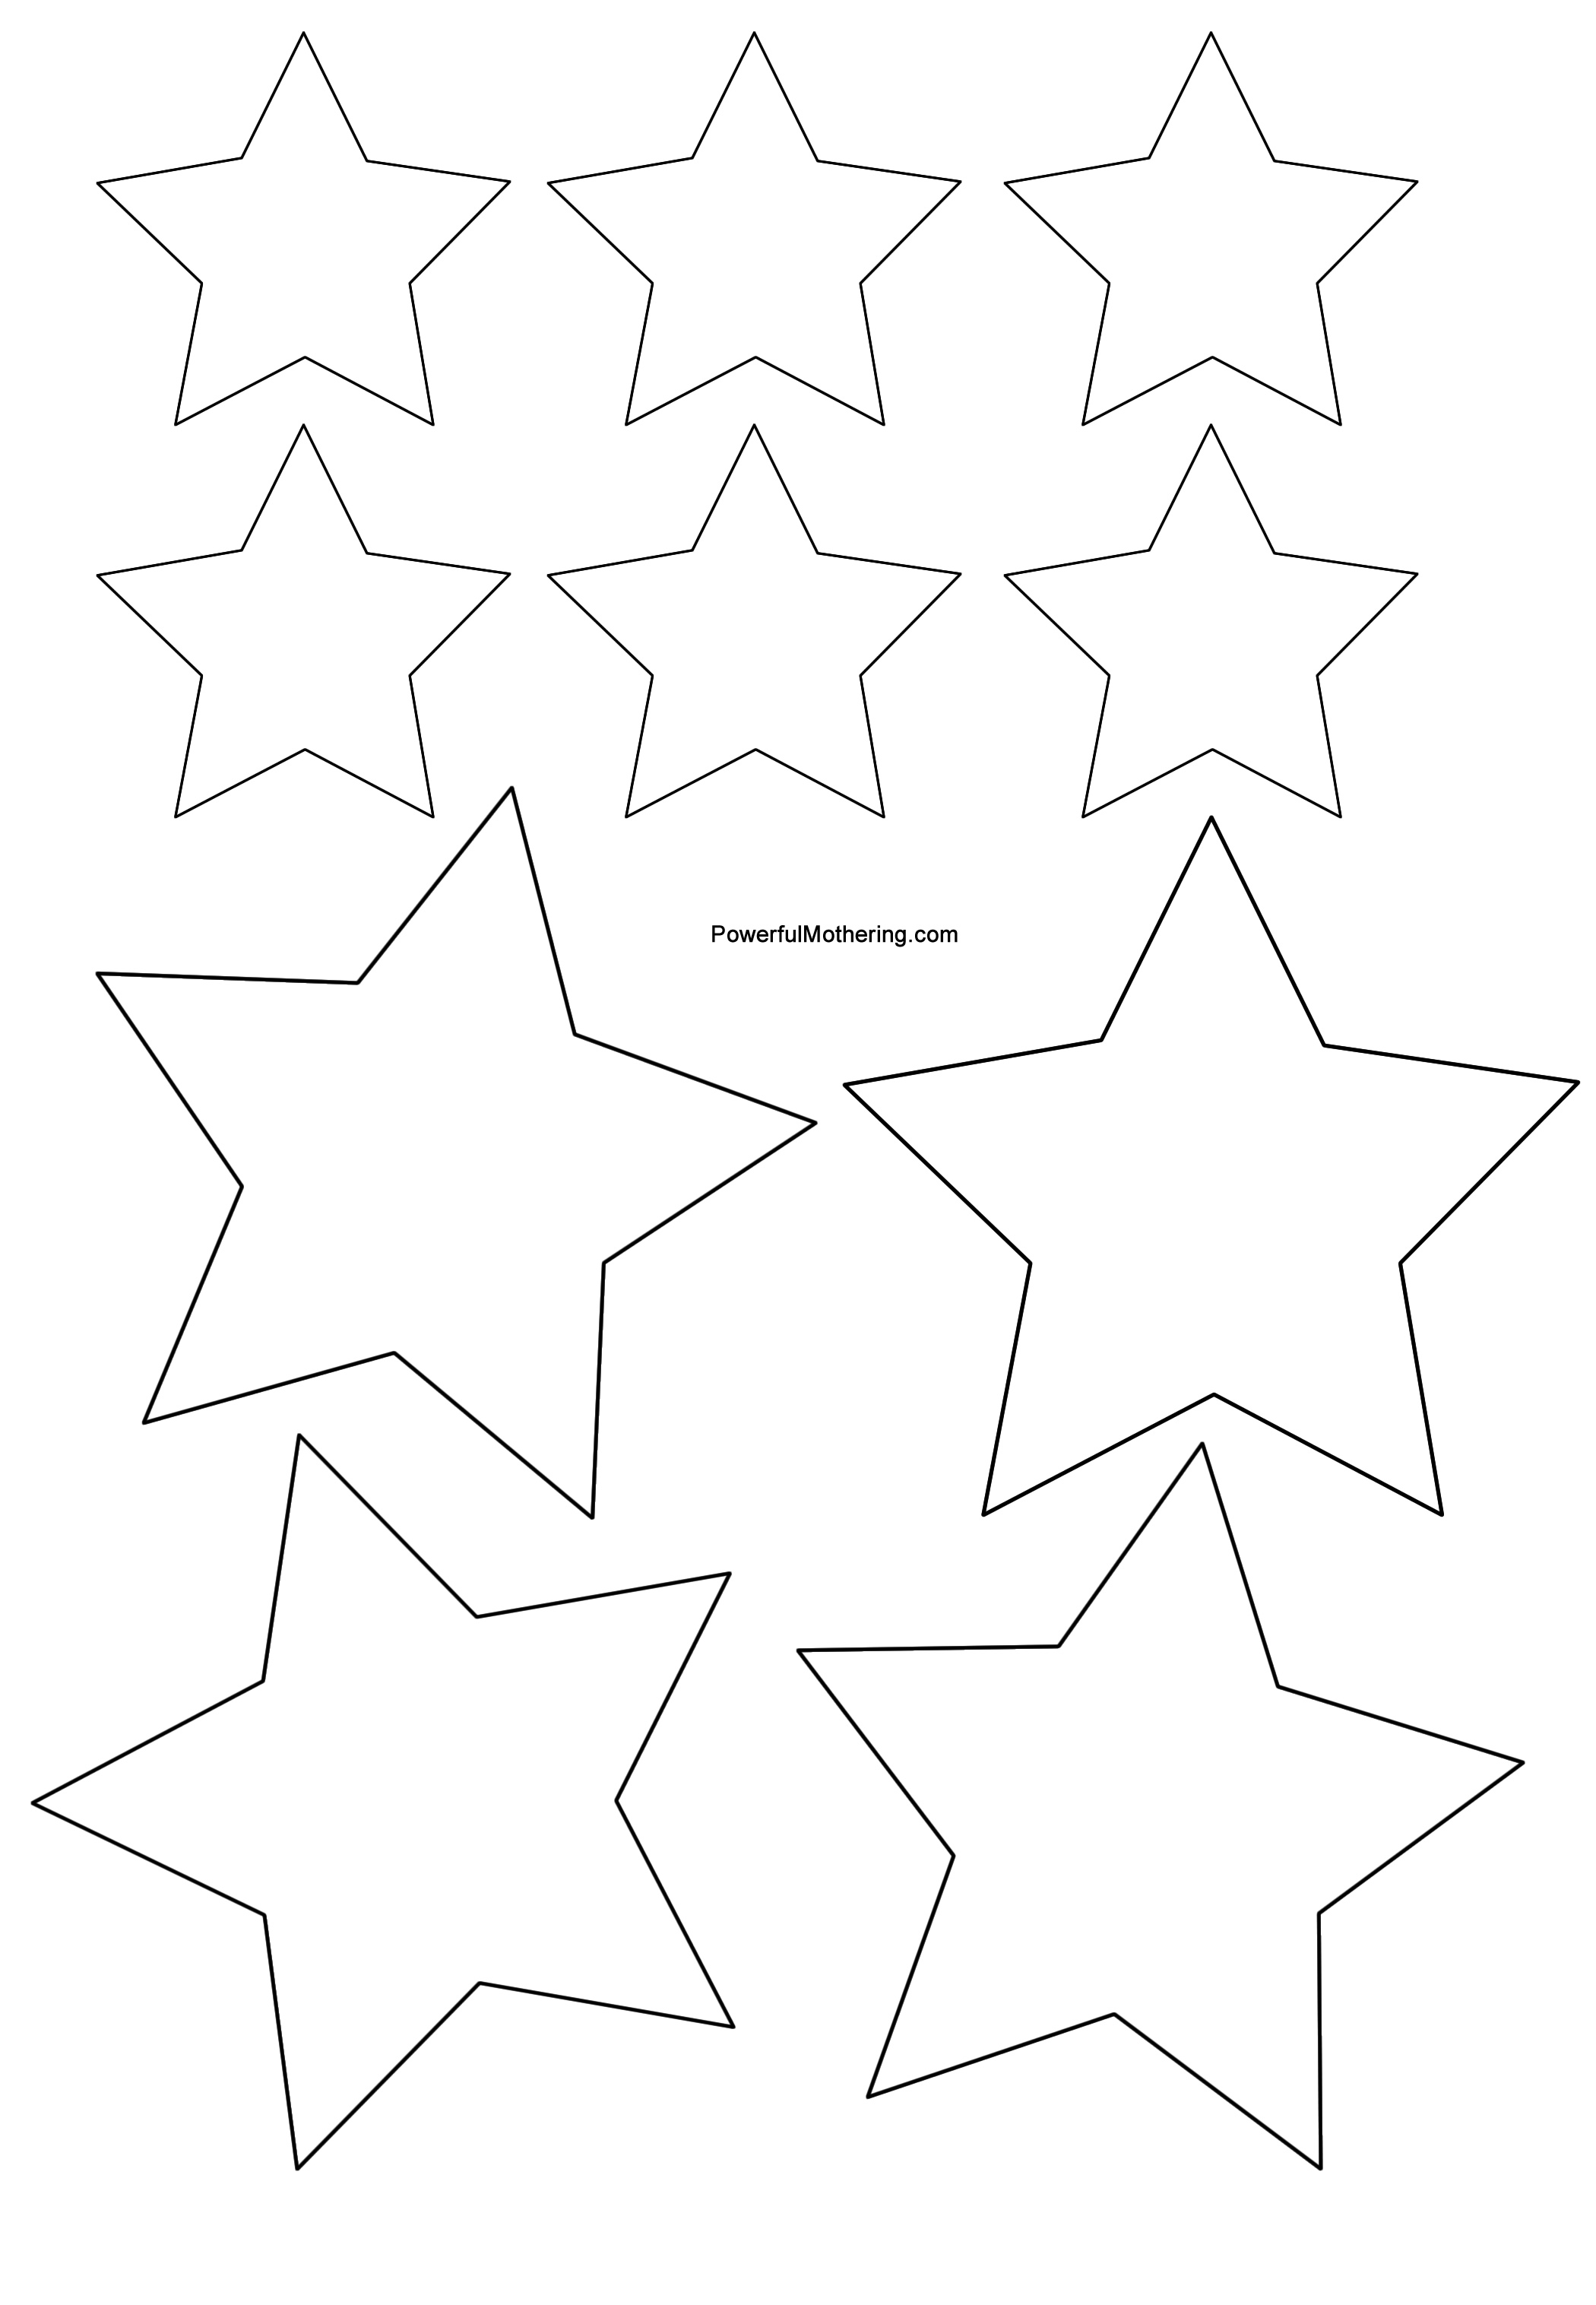 Free Printable Star, Download Free Printable Star png images, Free